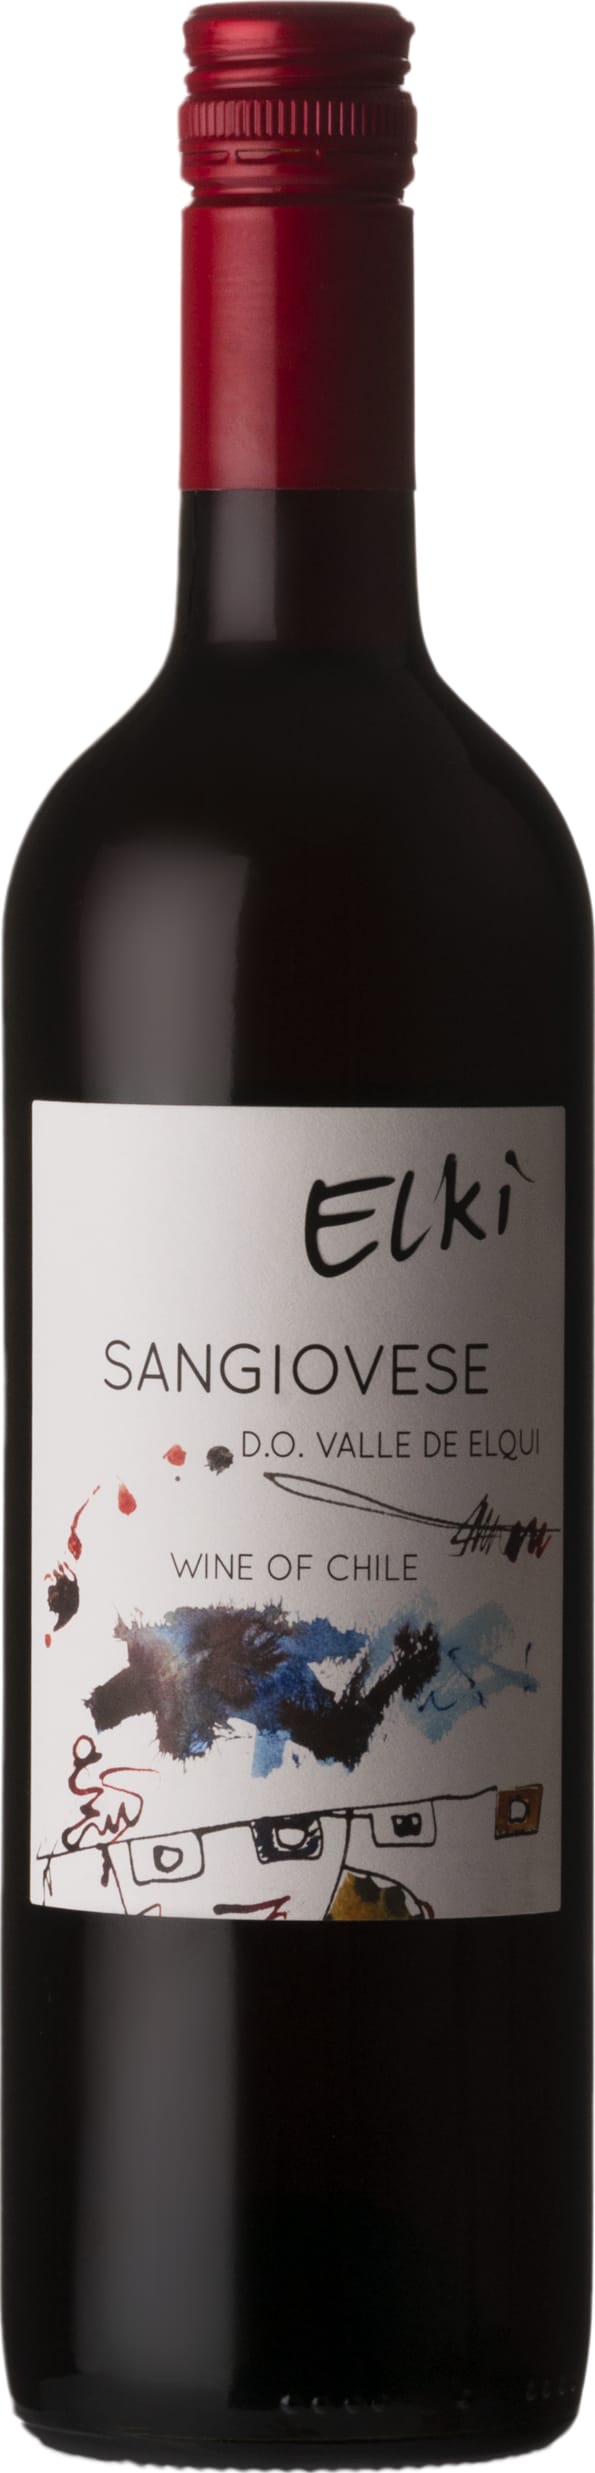 Vina Falernia Elki Sangiovese 2020 75cl - Buy Vina Falernia Wines from GREAT WINES DIRECT wine shop